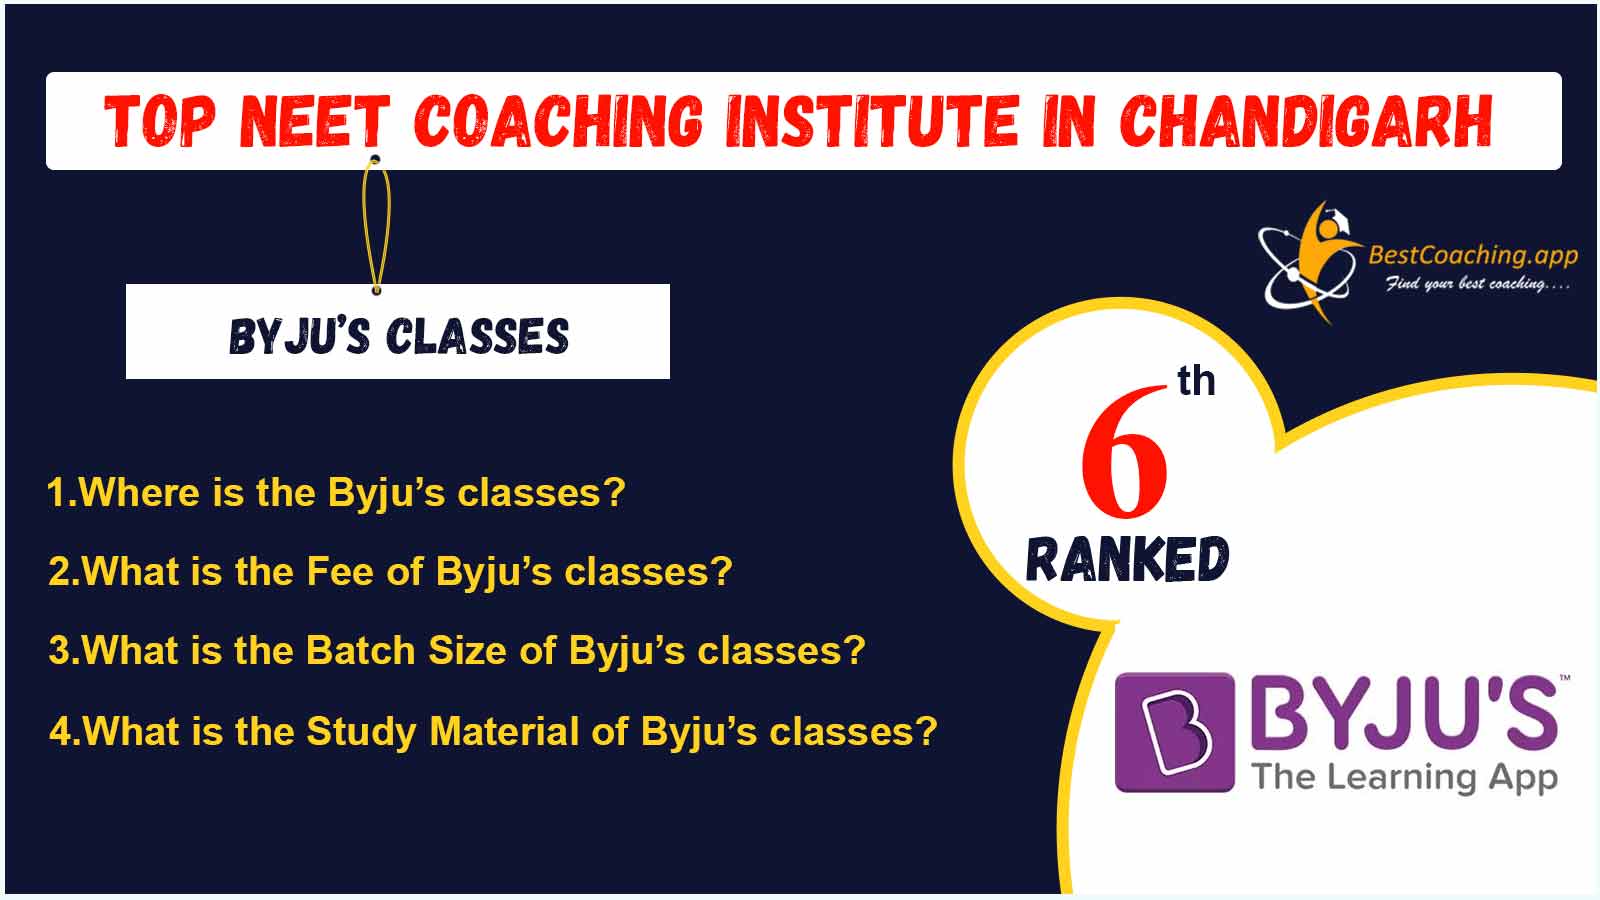 Top Neet Coaching Institute In Chandigarh